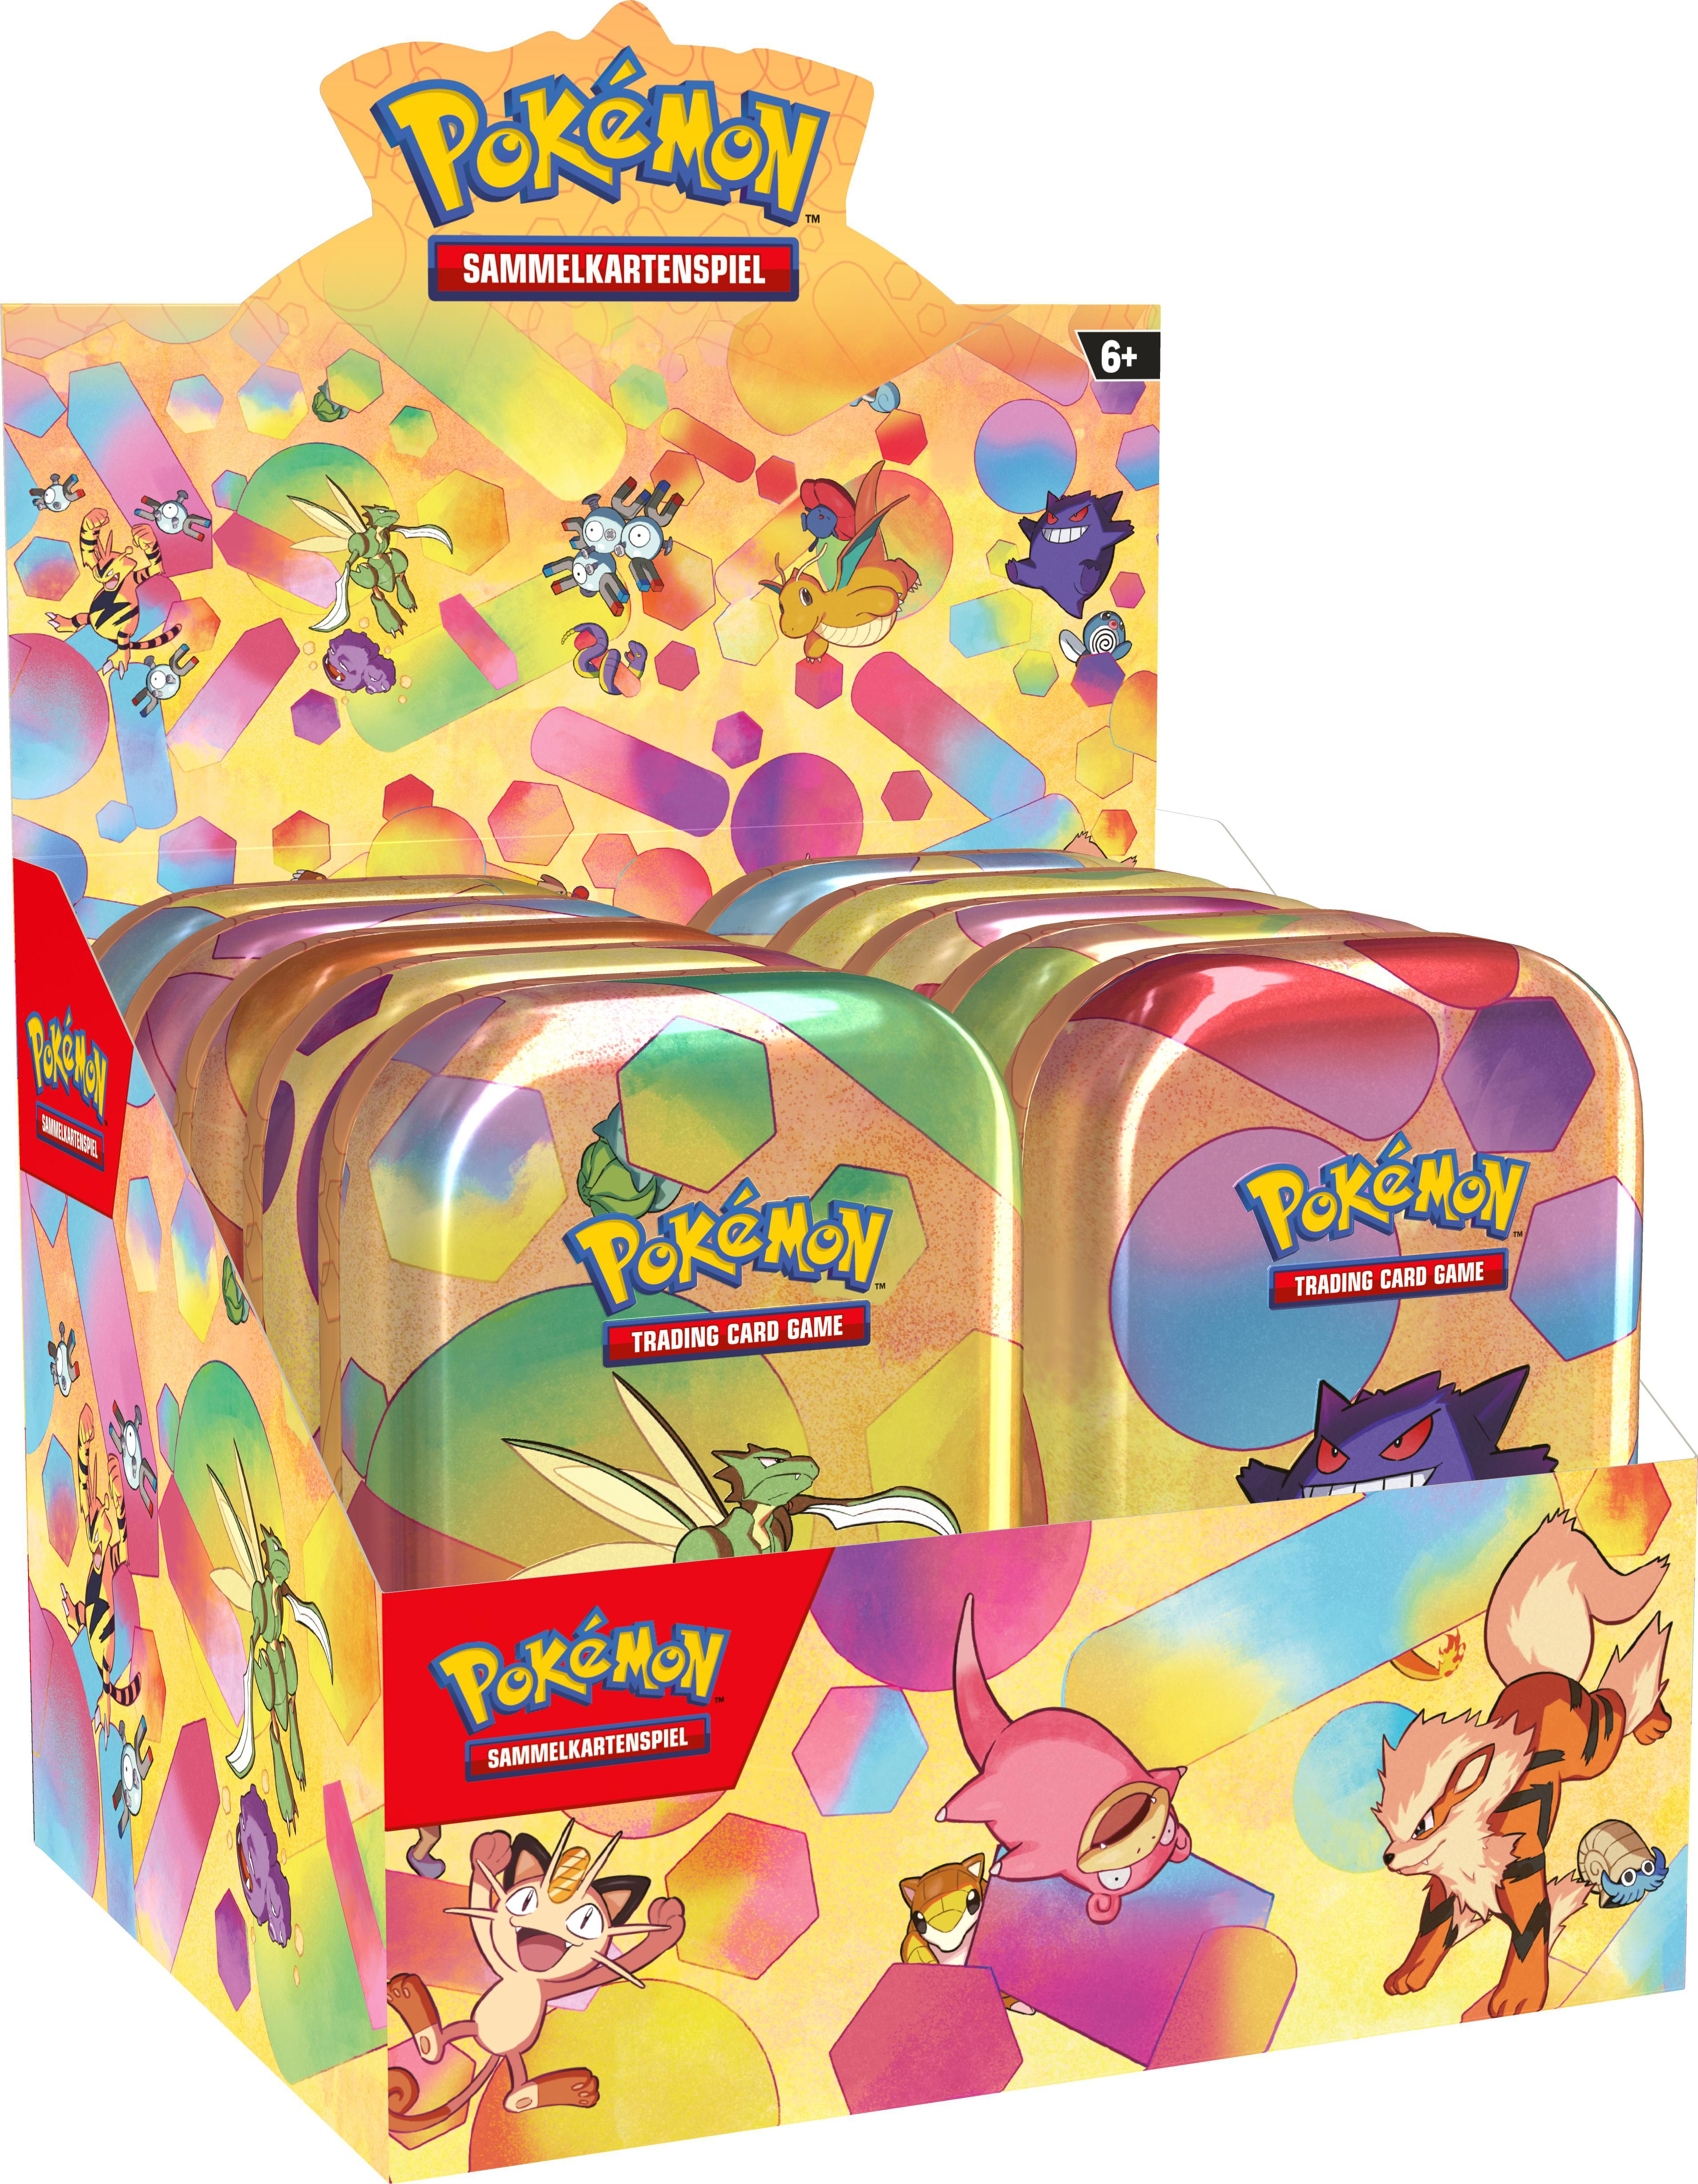 THE Sammelkarten Mini KP03.5 Pokémon 45553 INT. POKEMON Tins COMPANY